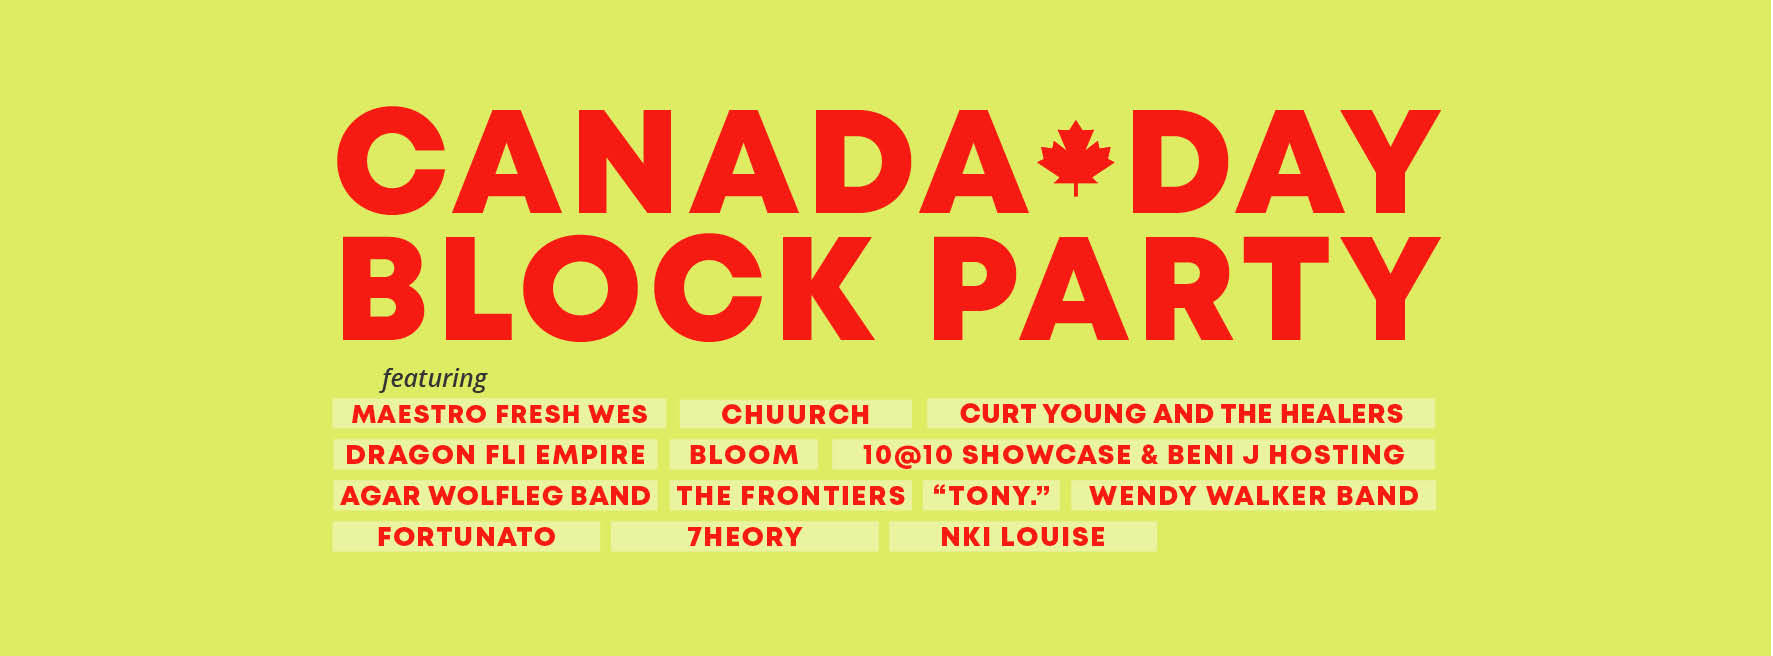 Canada Day Block Party (Family Fun Calgary)